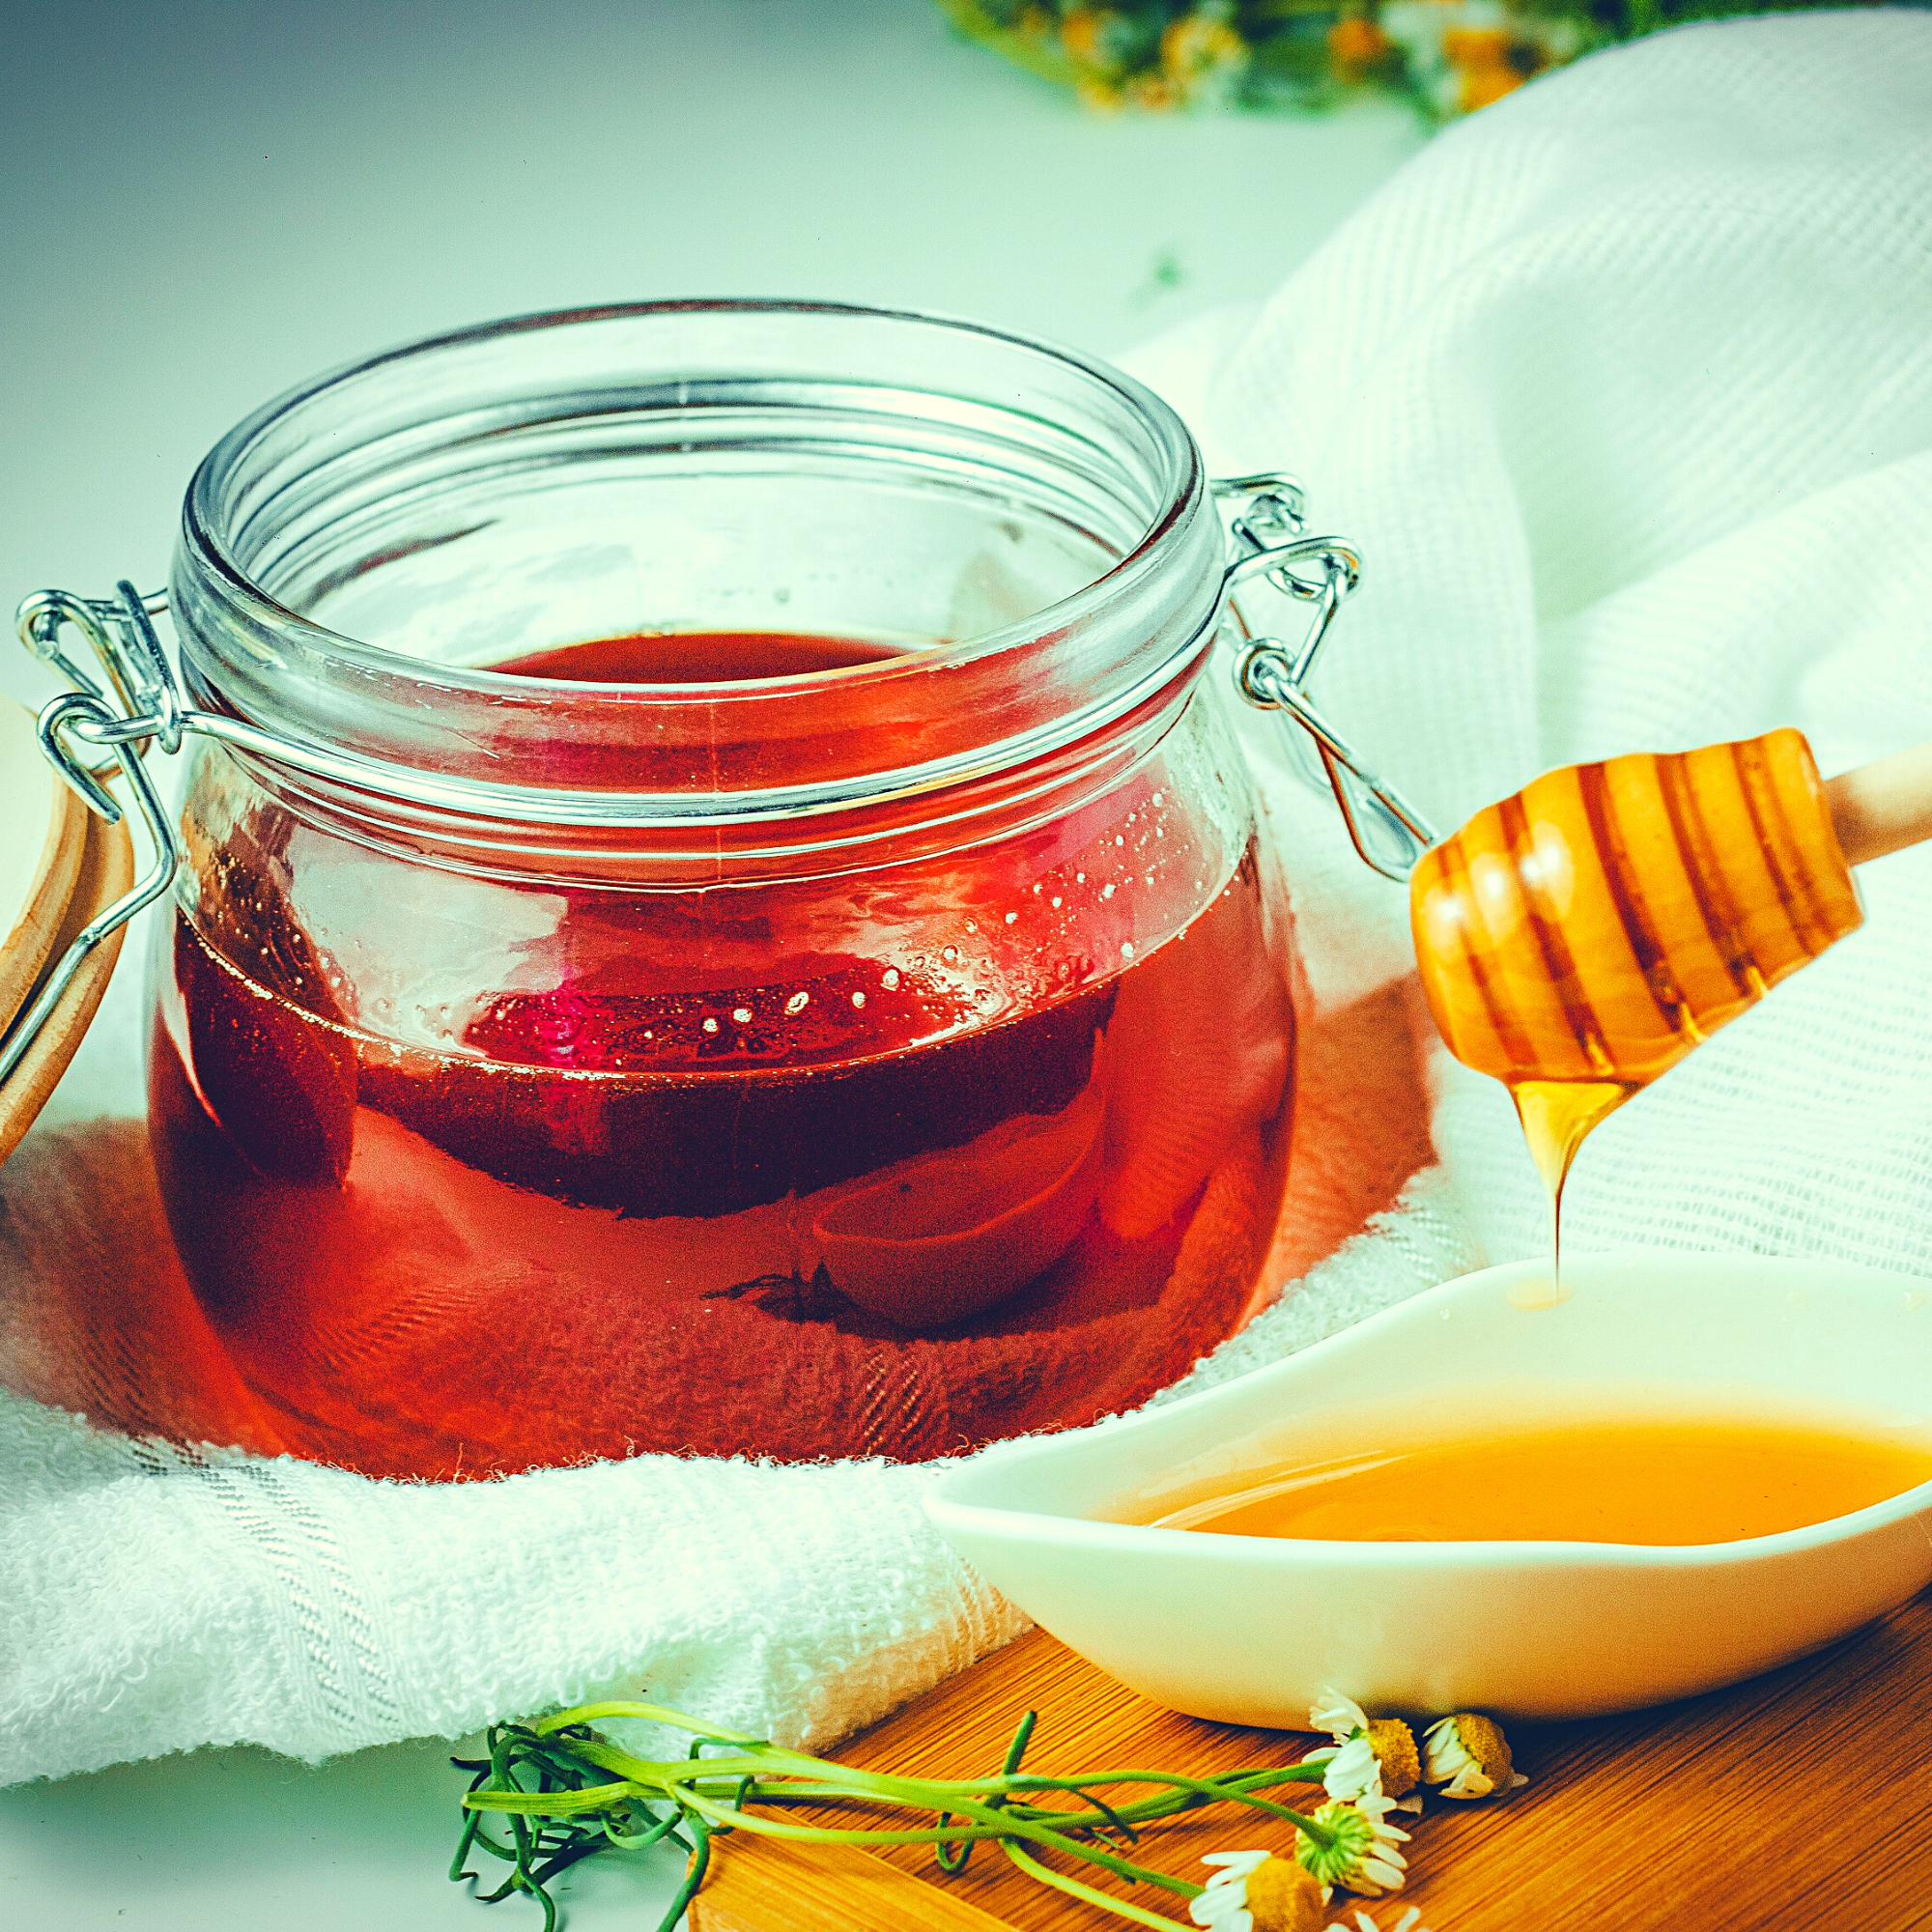 Is Honey a Healthy Choice?